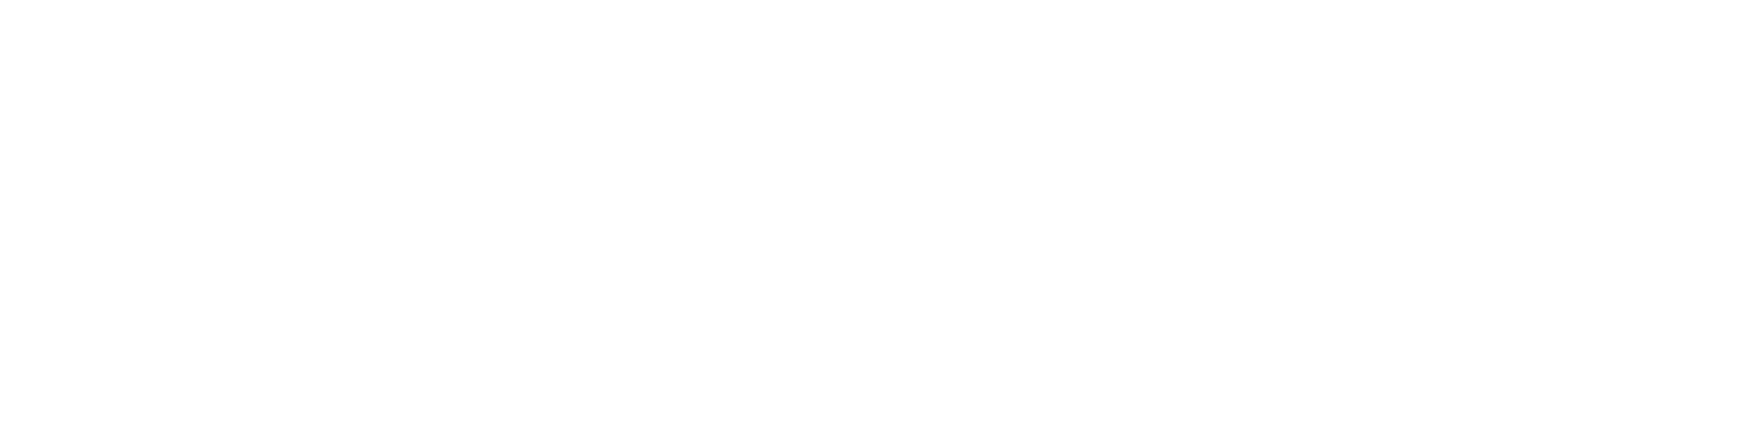 Official Macro Global (MG) Logo - White